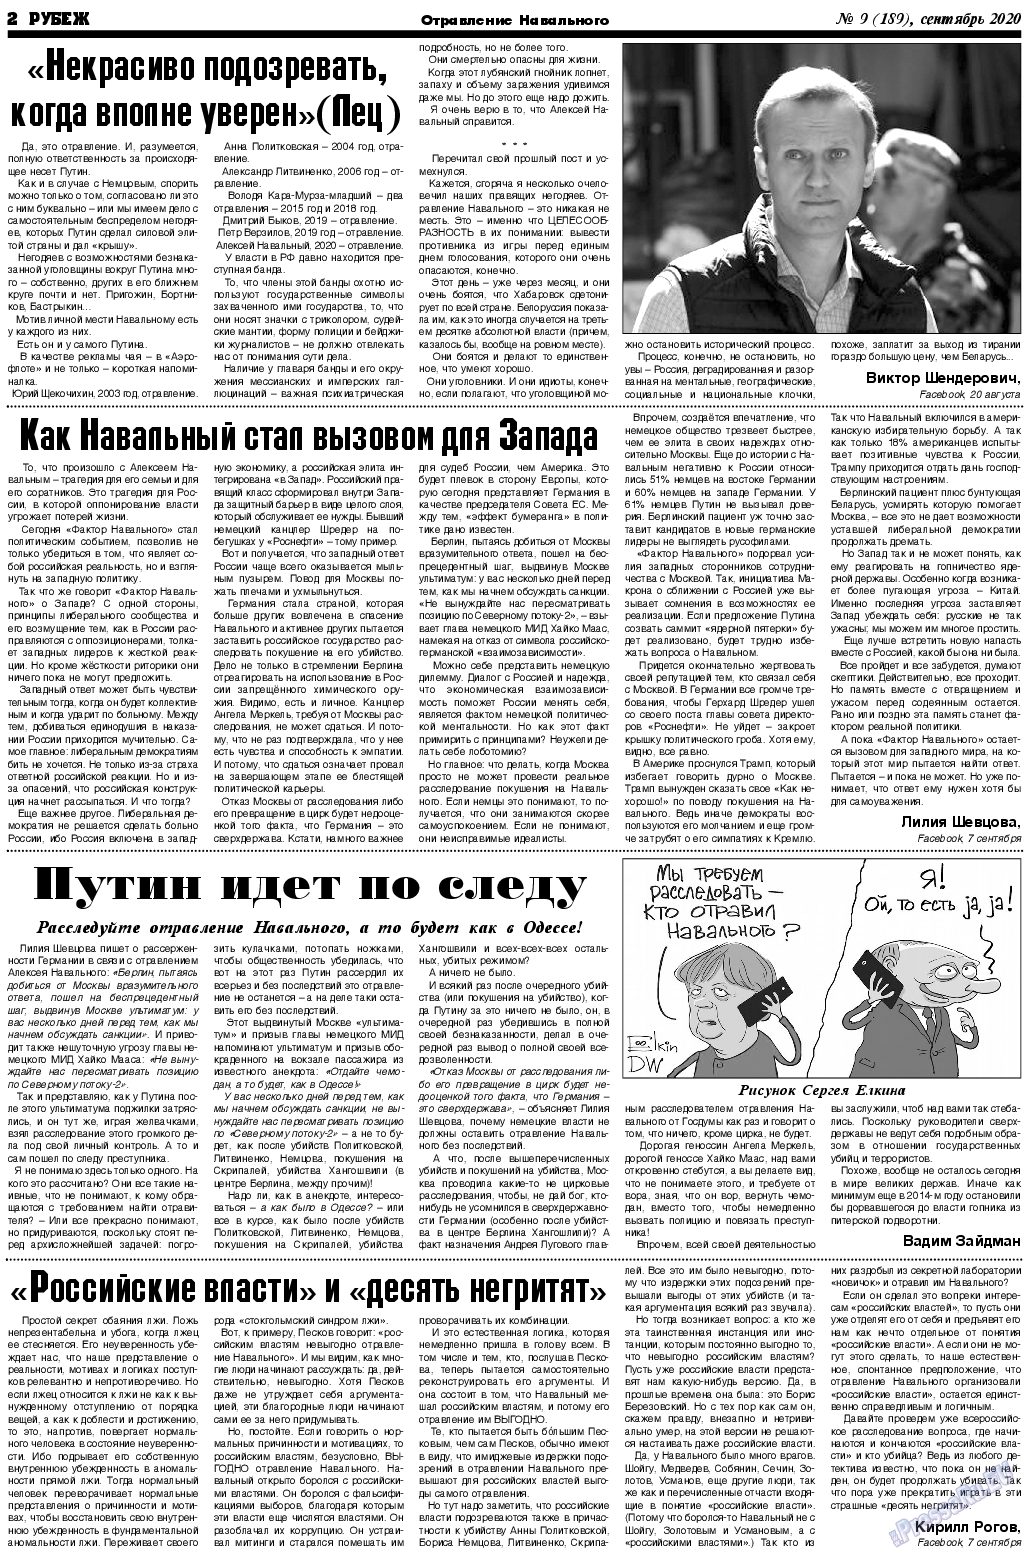 Рубеж, газета. 2020 №9 стр.2